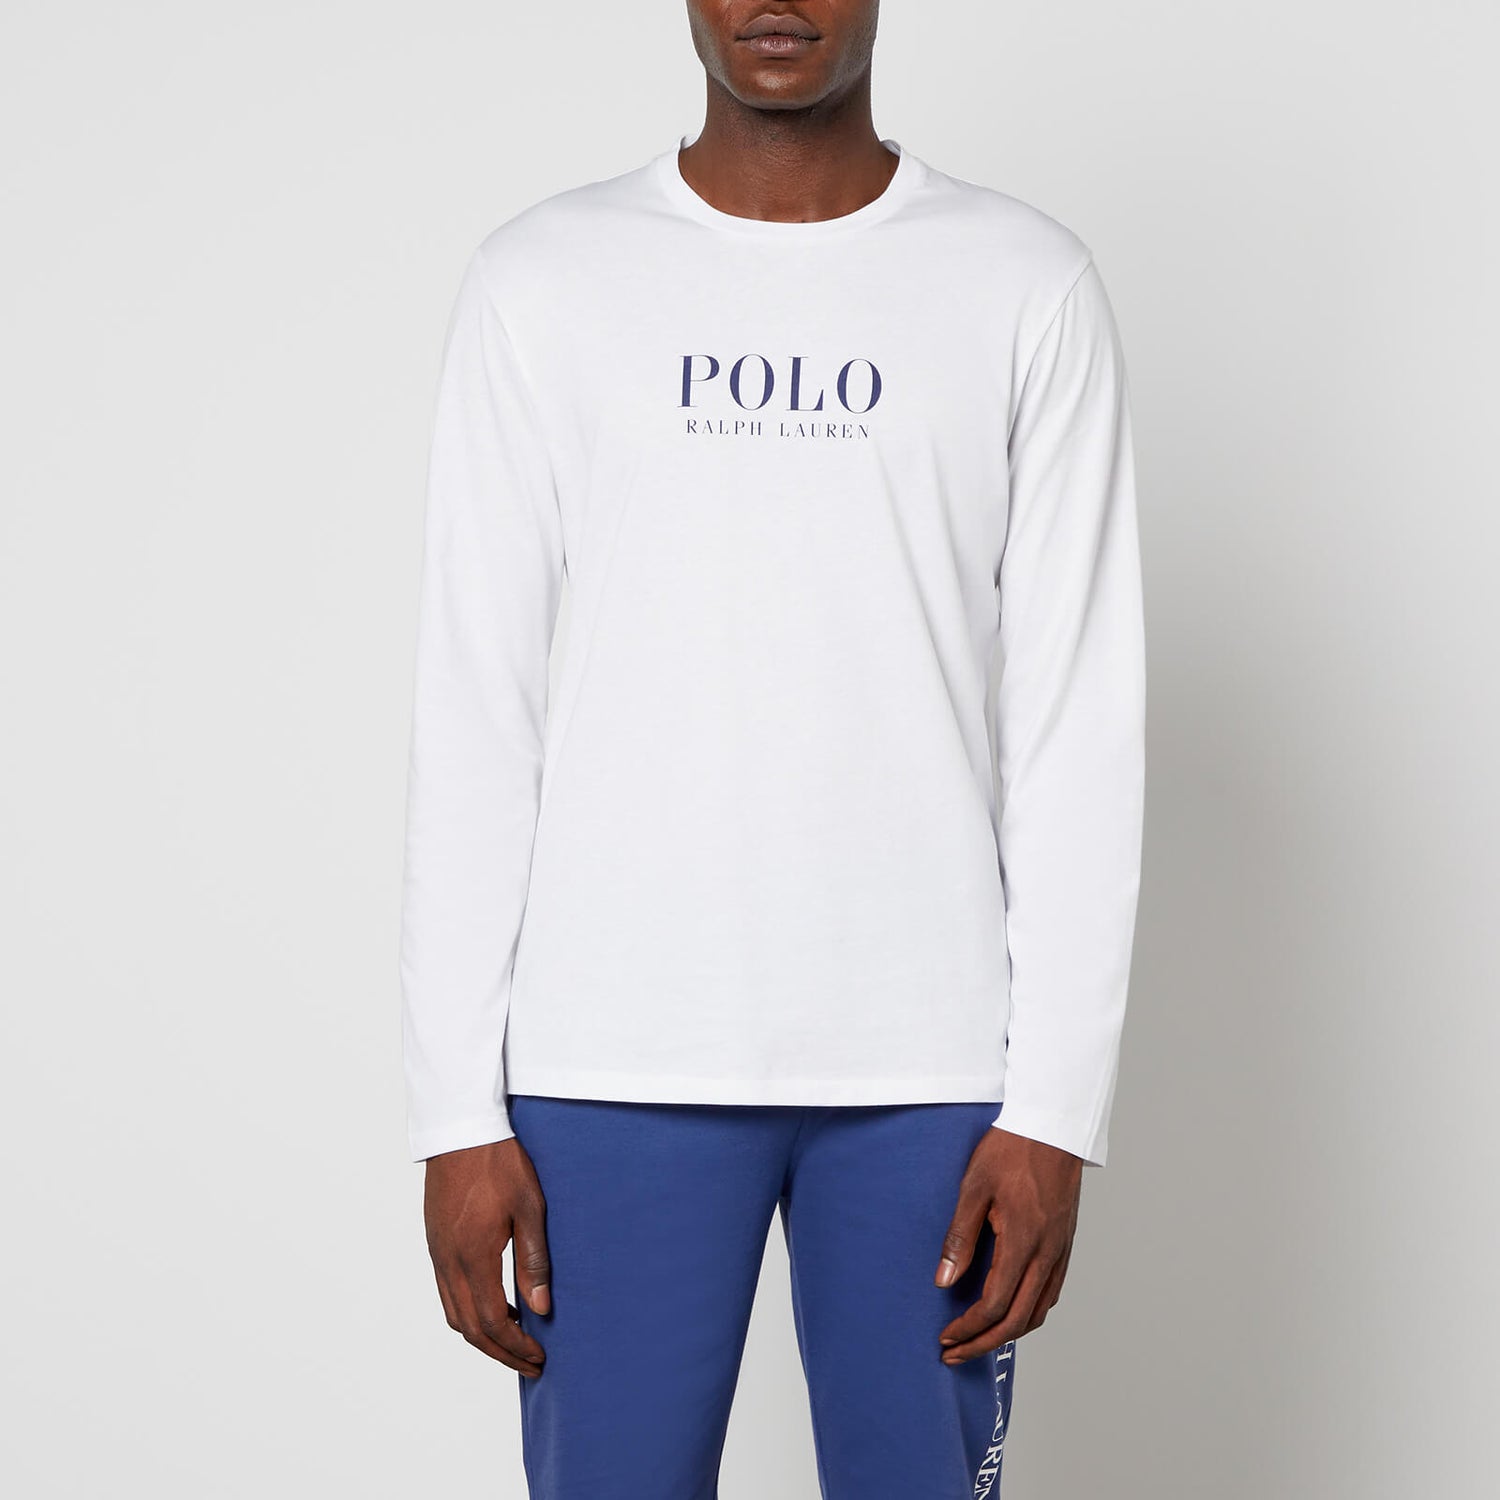 Polo Ralph Lauren Men's Boxed Logo Long Sleeve Top - White - S